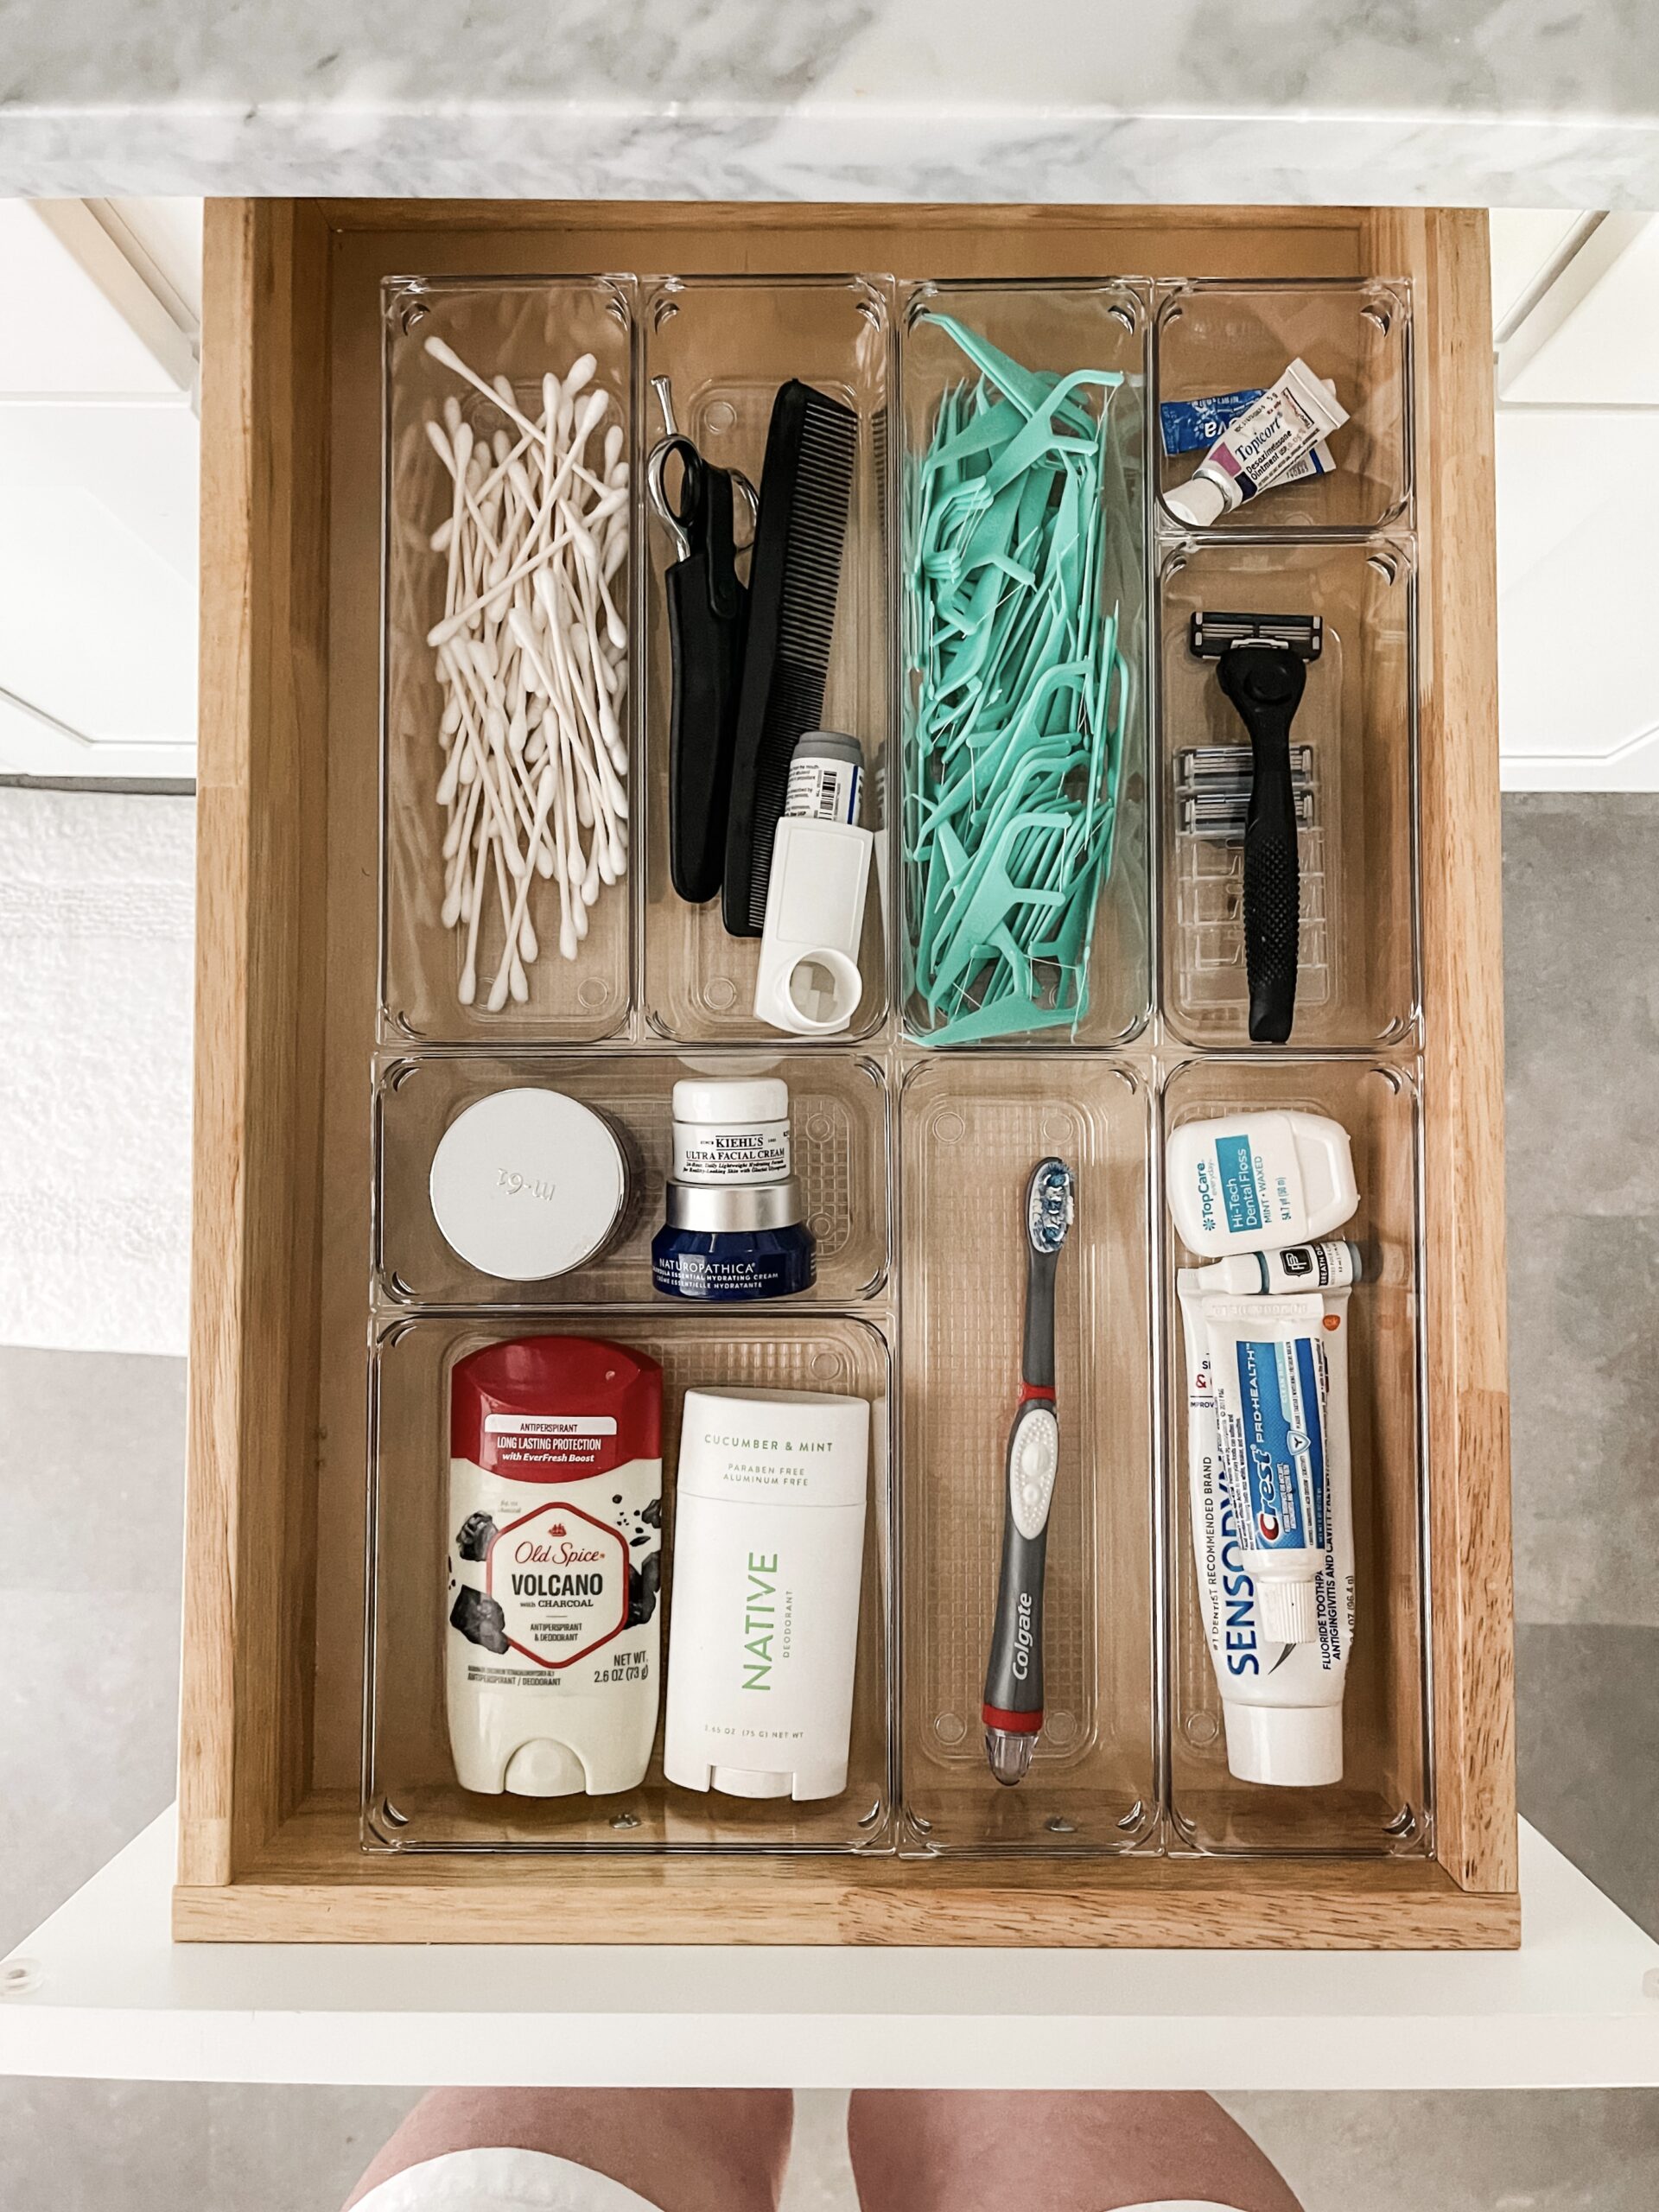 Bathroom Organization: How to Organize Under the Cabinet 